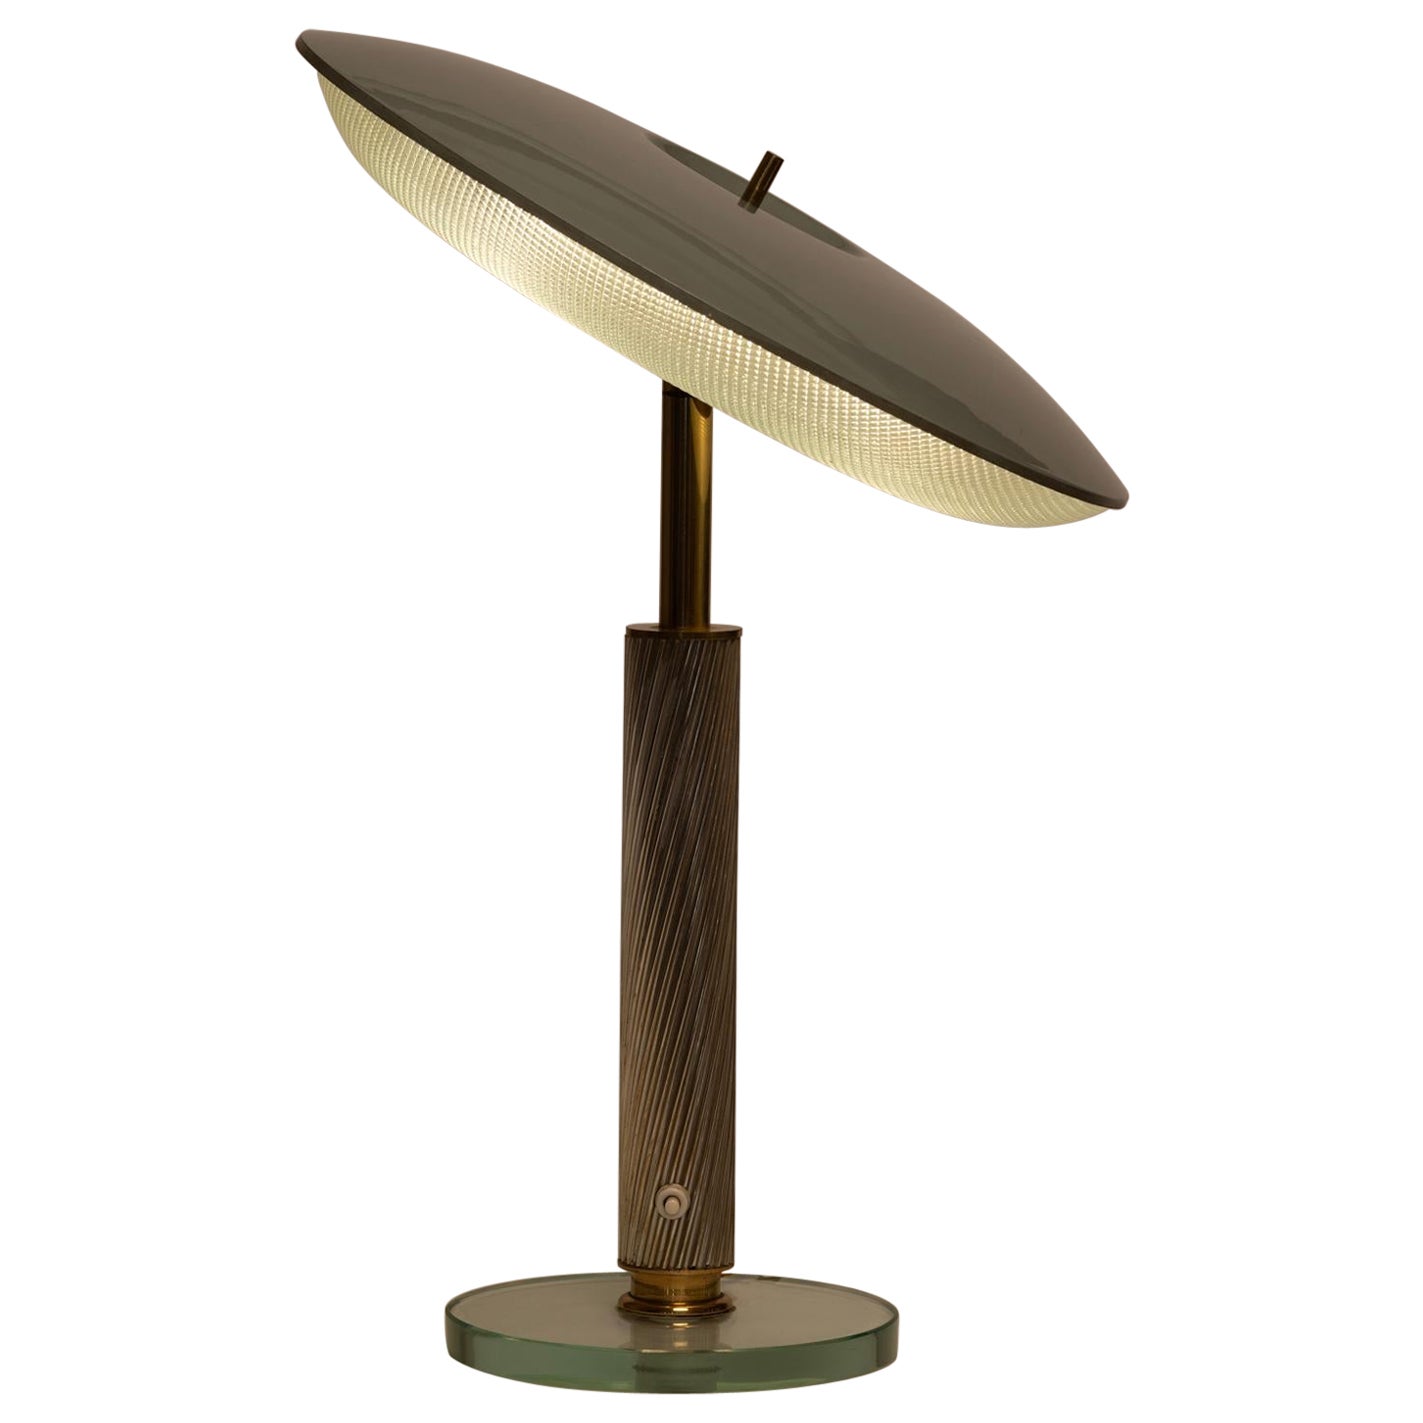 Rare 1940s Table Lamp by Pietro Chiesa for Fontana Arte, Italy.